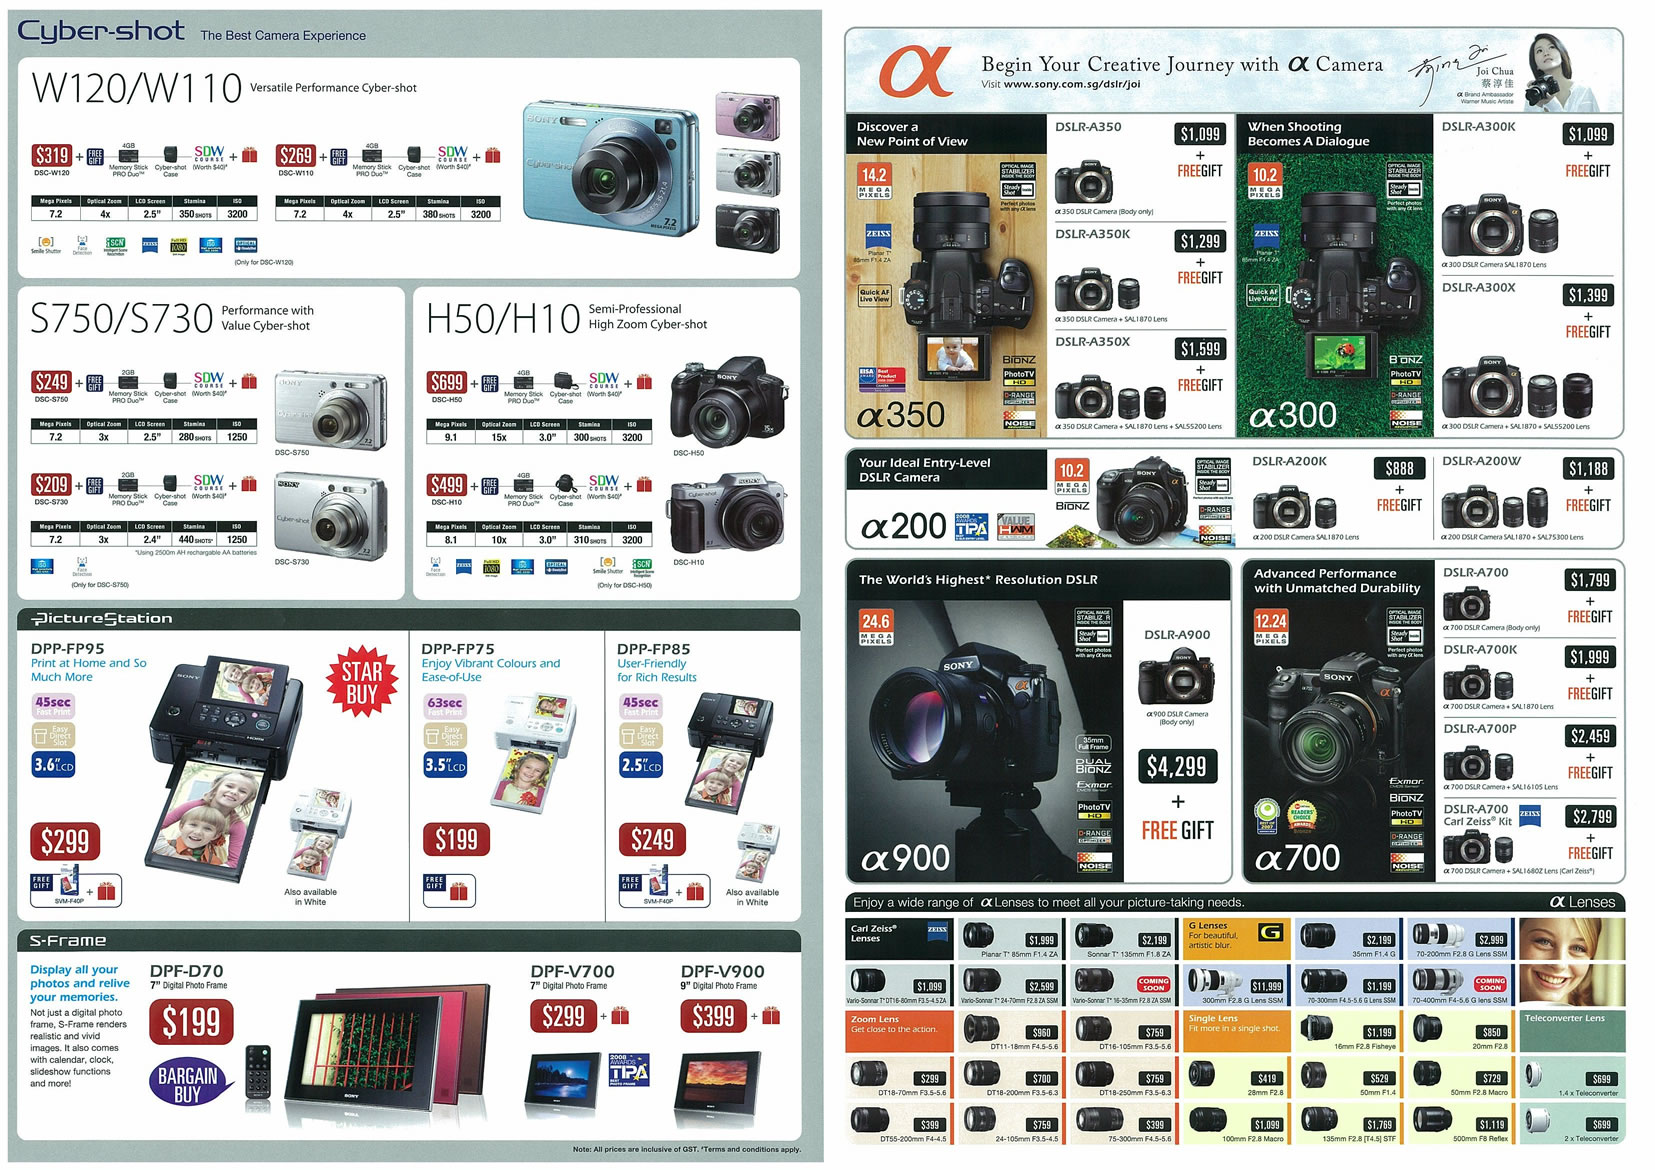 Sitex 2008 price list image brochure of Sony Handycam Cybershot Alpha Page 2 - Vr-zone Tclong